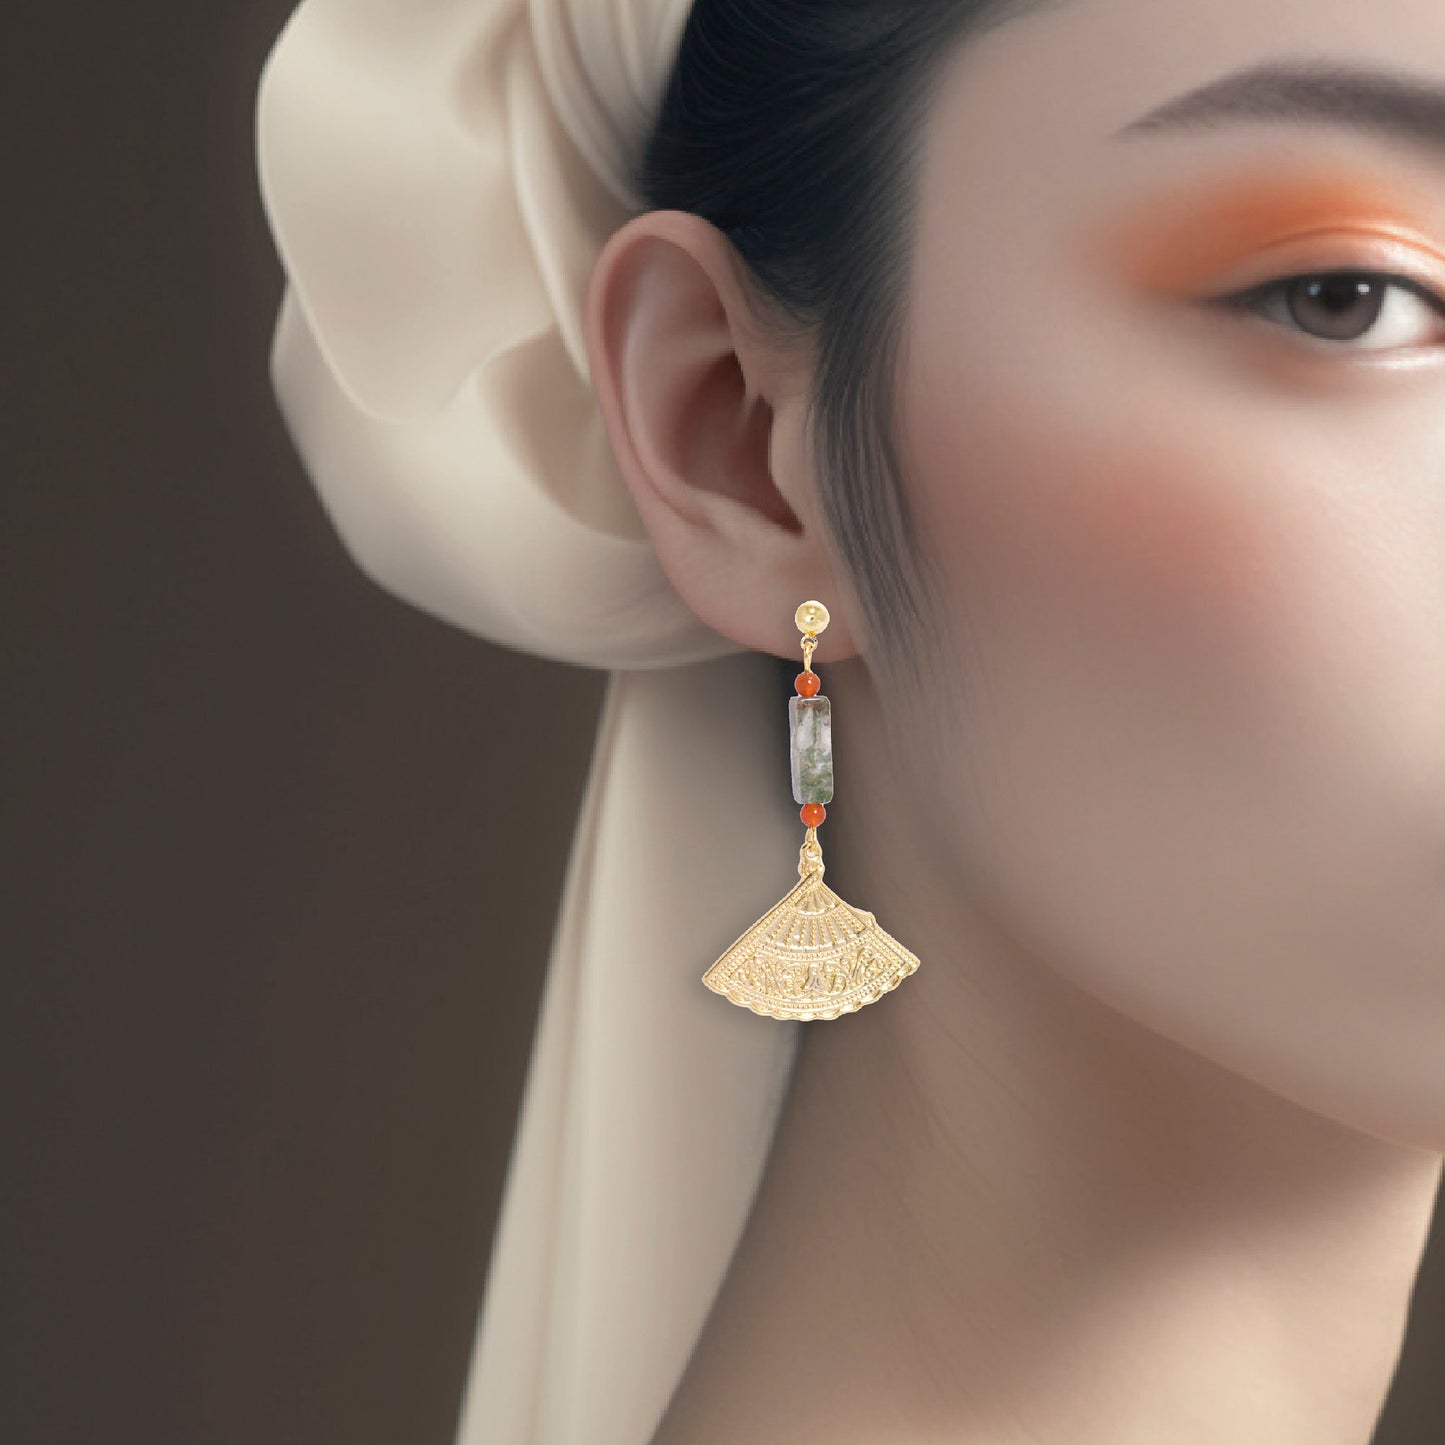 The Antecedent Store Oriental Fan Motif Earrings - 14K Real Gold Plated Jewelry